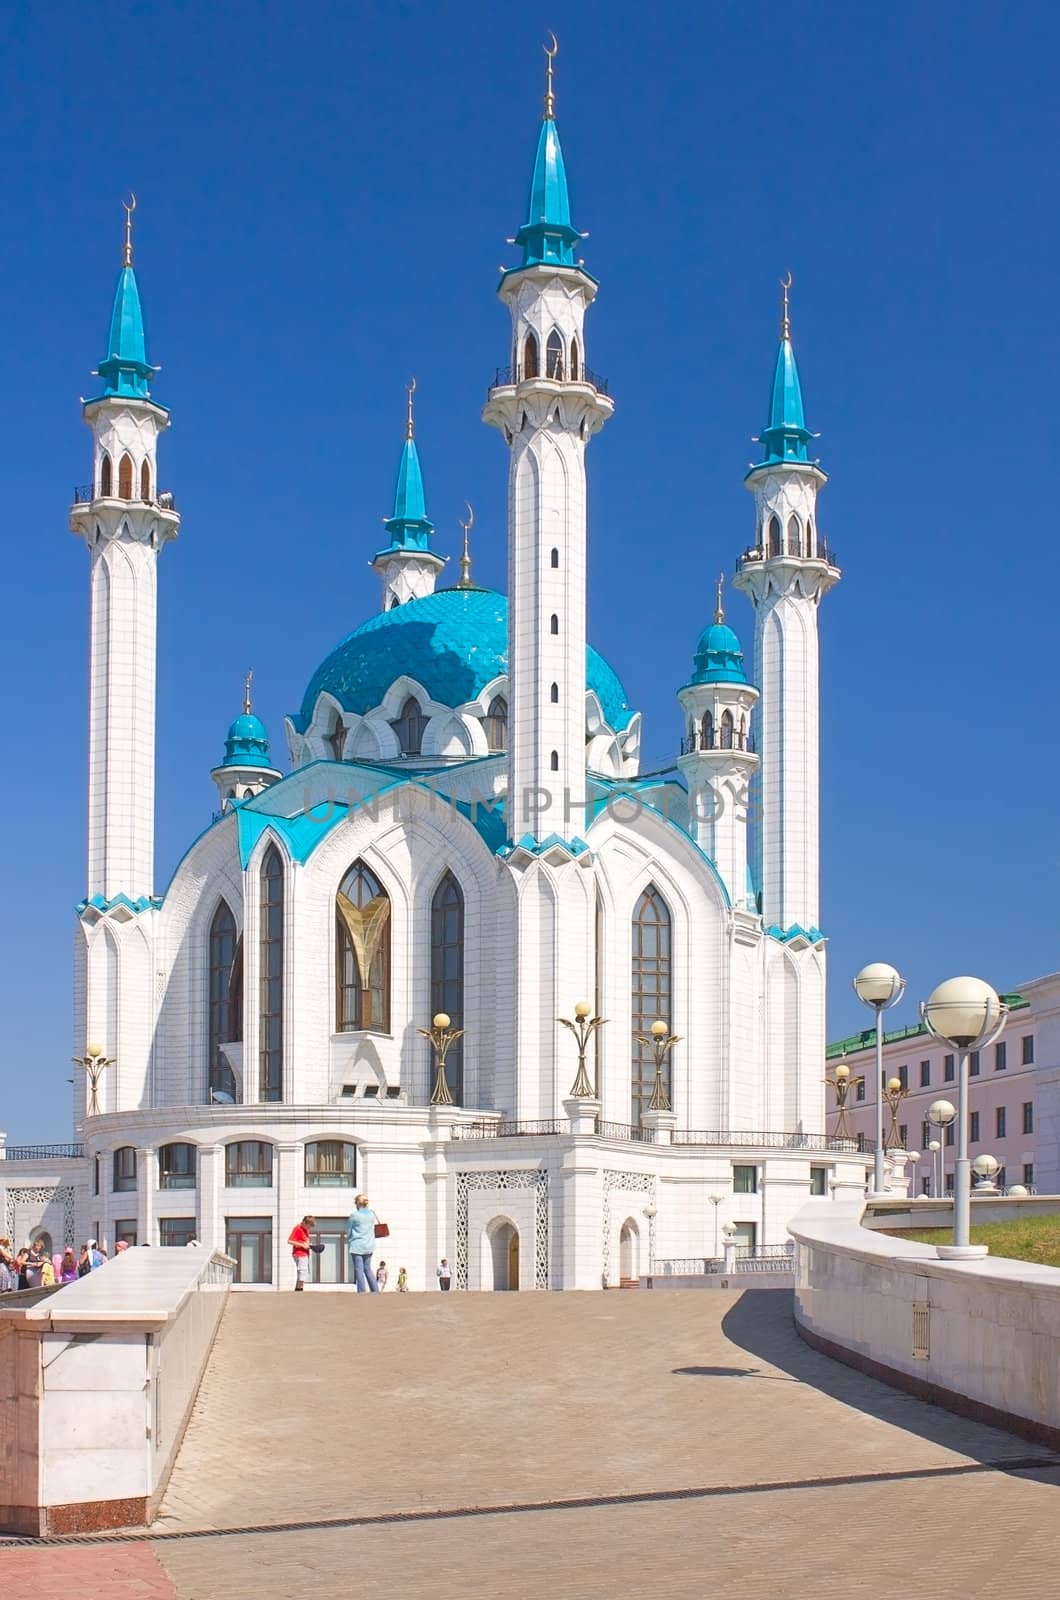 View of the beautiful Qolsharif Mosque in the Kremlin, Kazan, Russia.